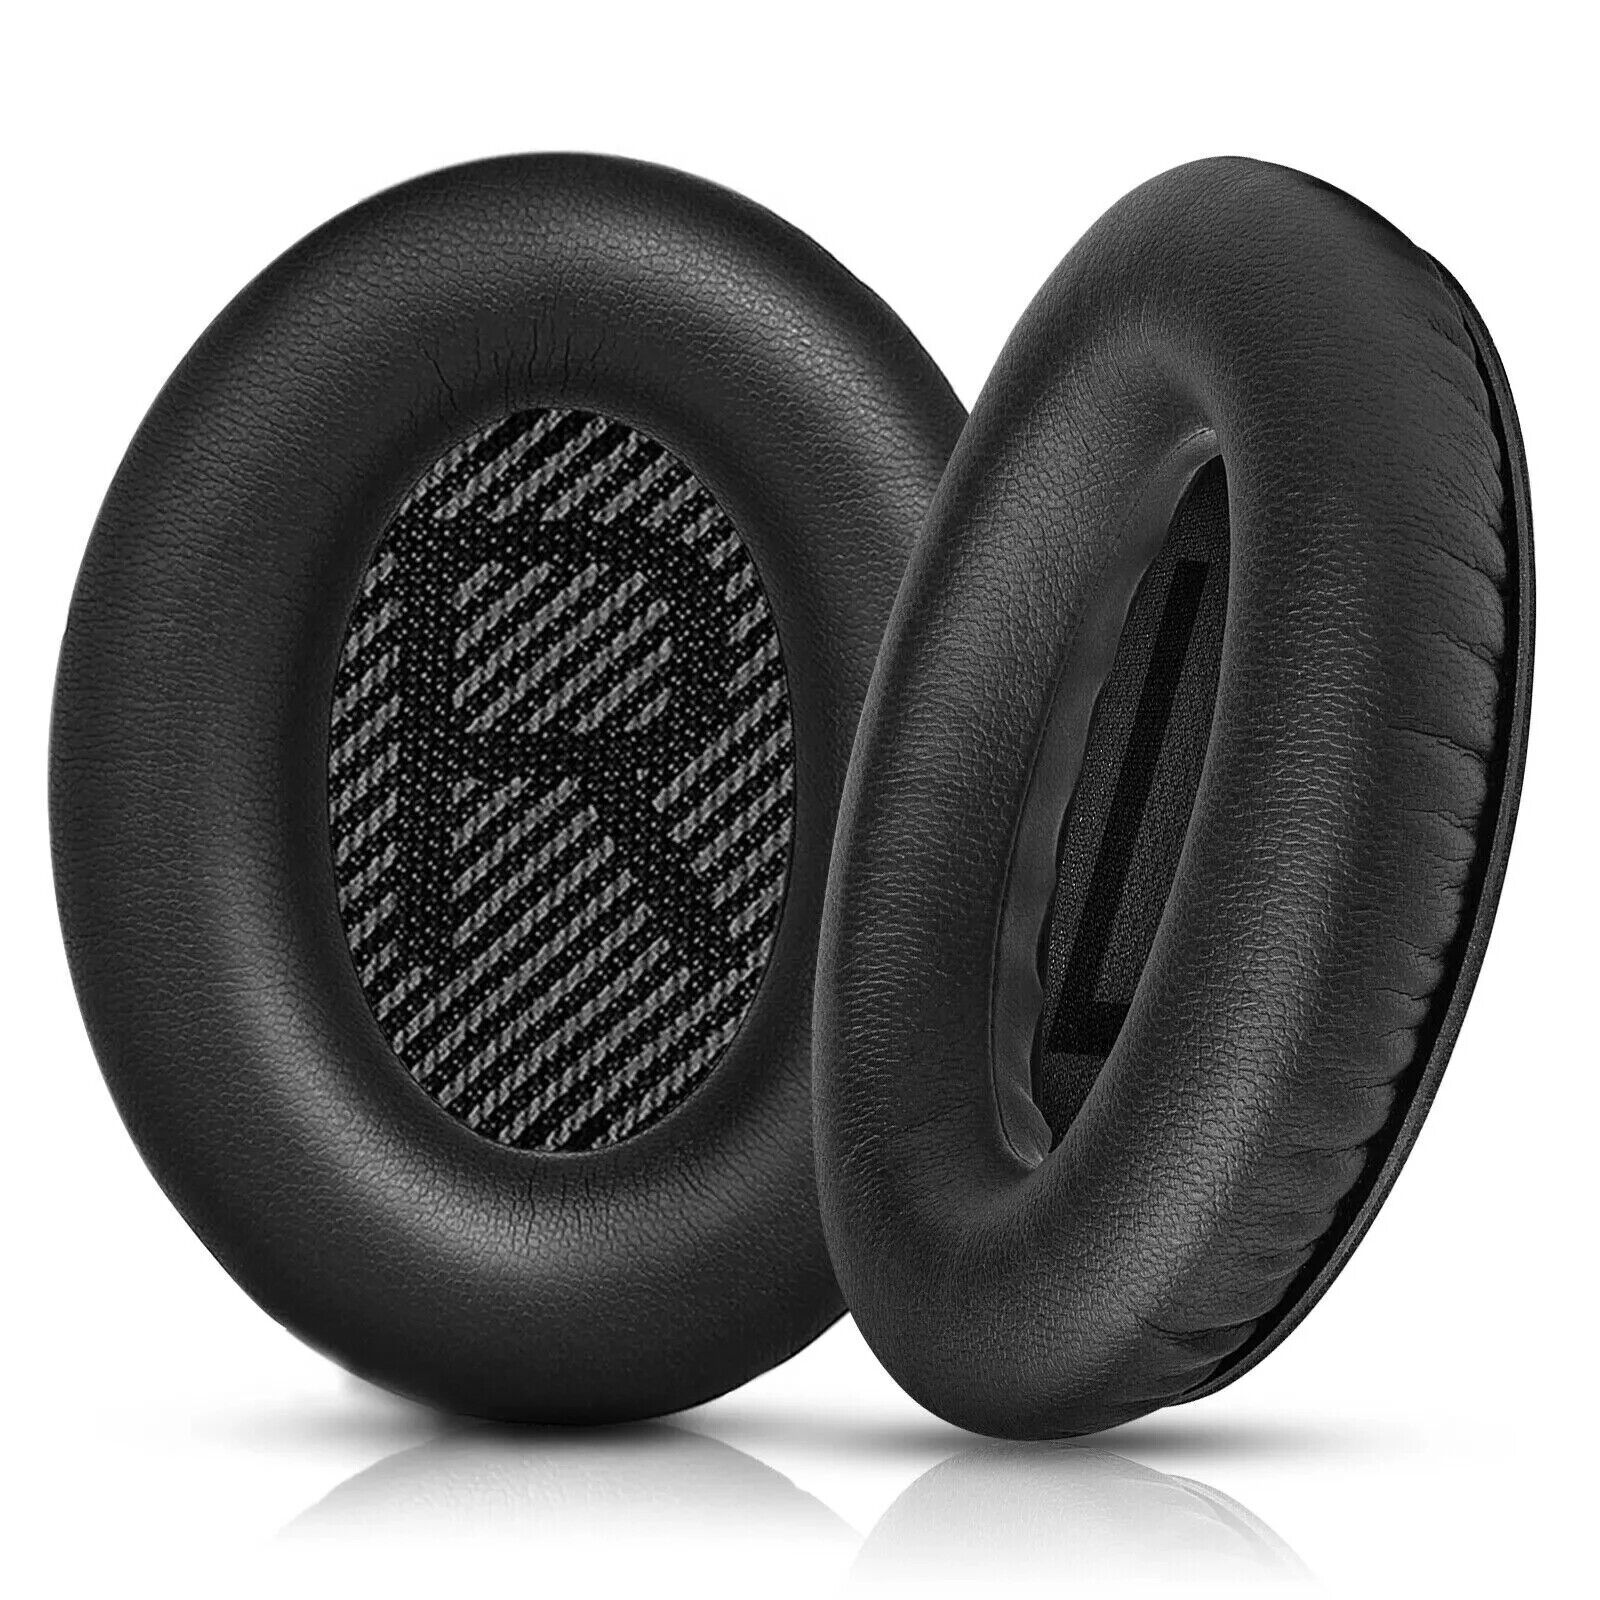 Ear Pads for Bose Comfort QC35/QC35 II Headphones Replacement Soft Cushion